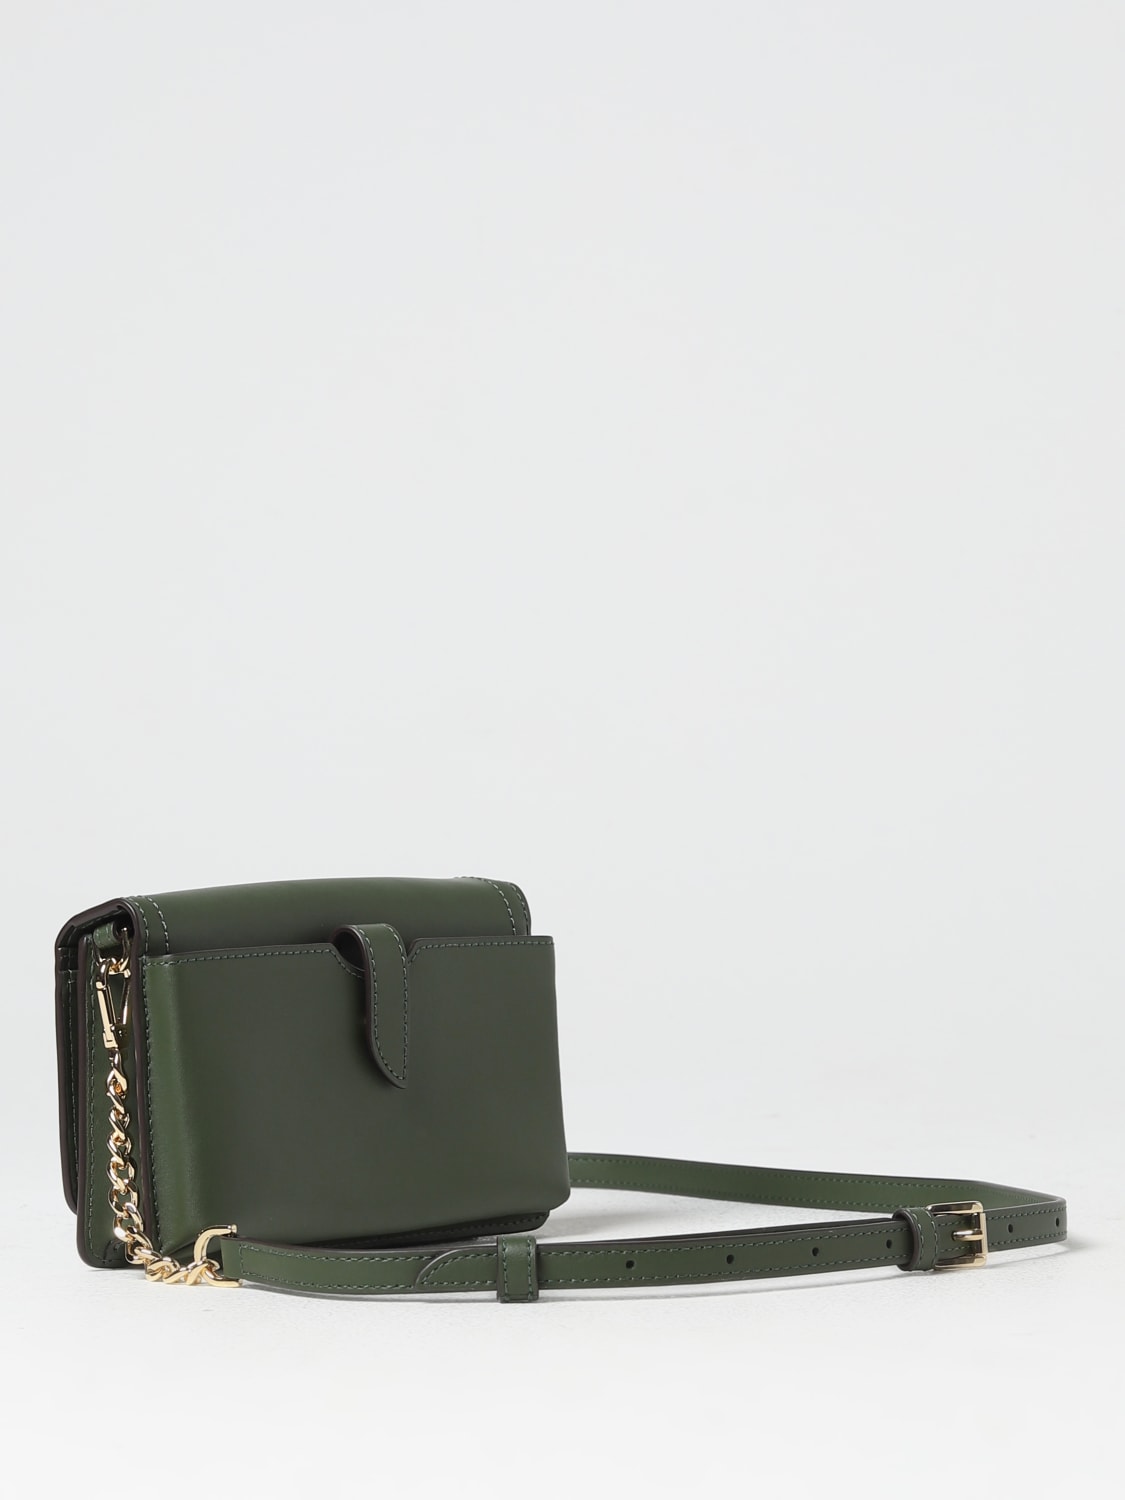 Lord & Taylor leather handbag/briefcase